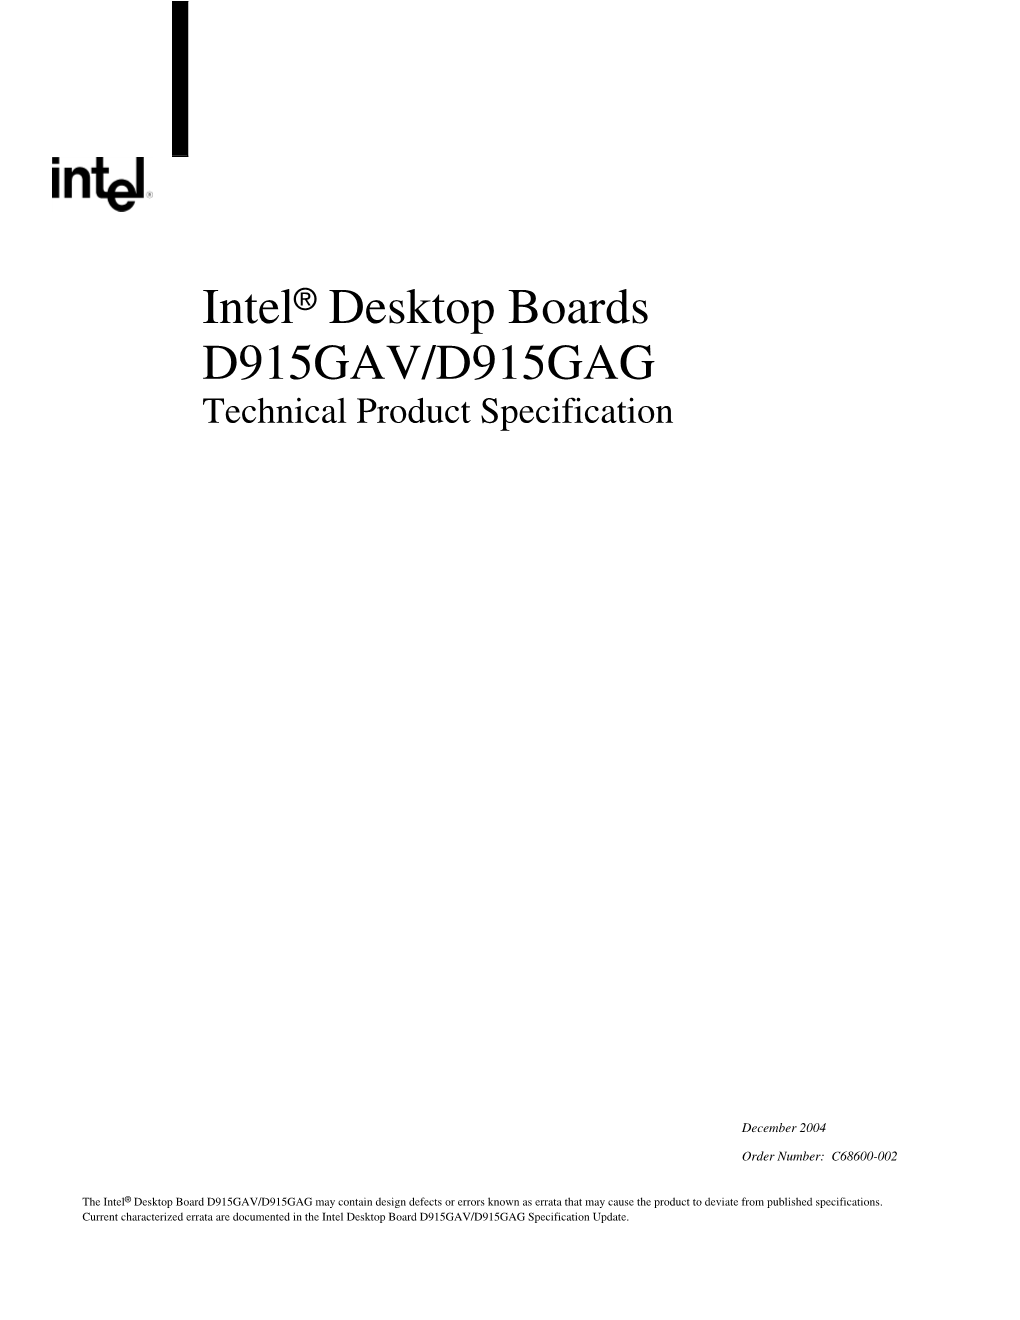 Intel® Desktop Boards D915GAV/D915GAG Technical Product Specification